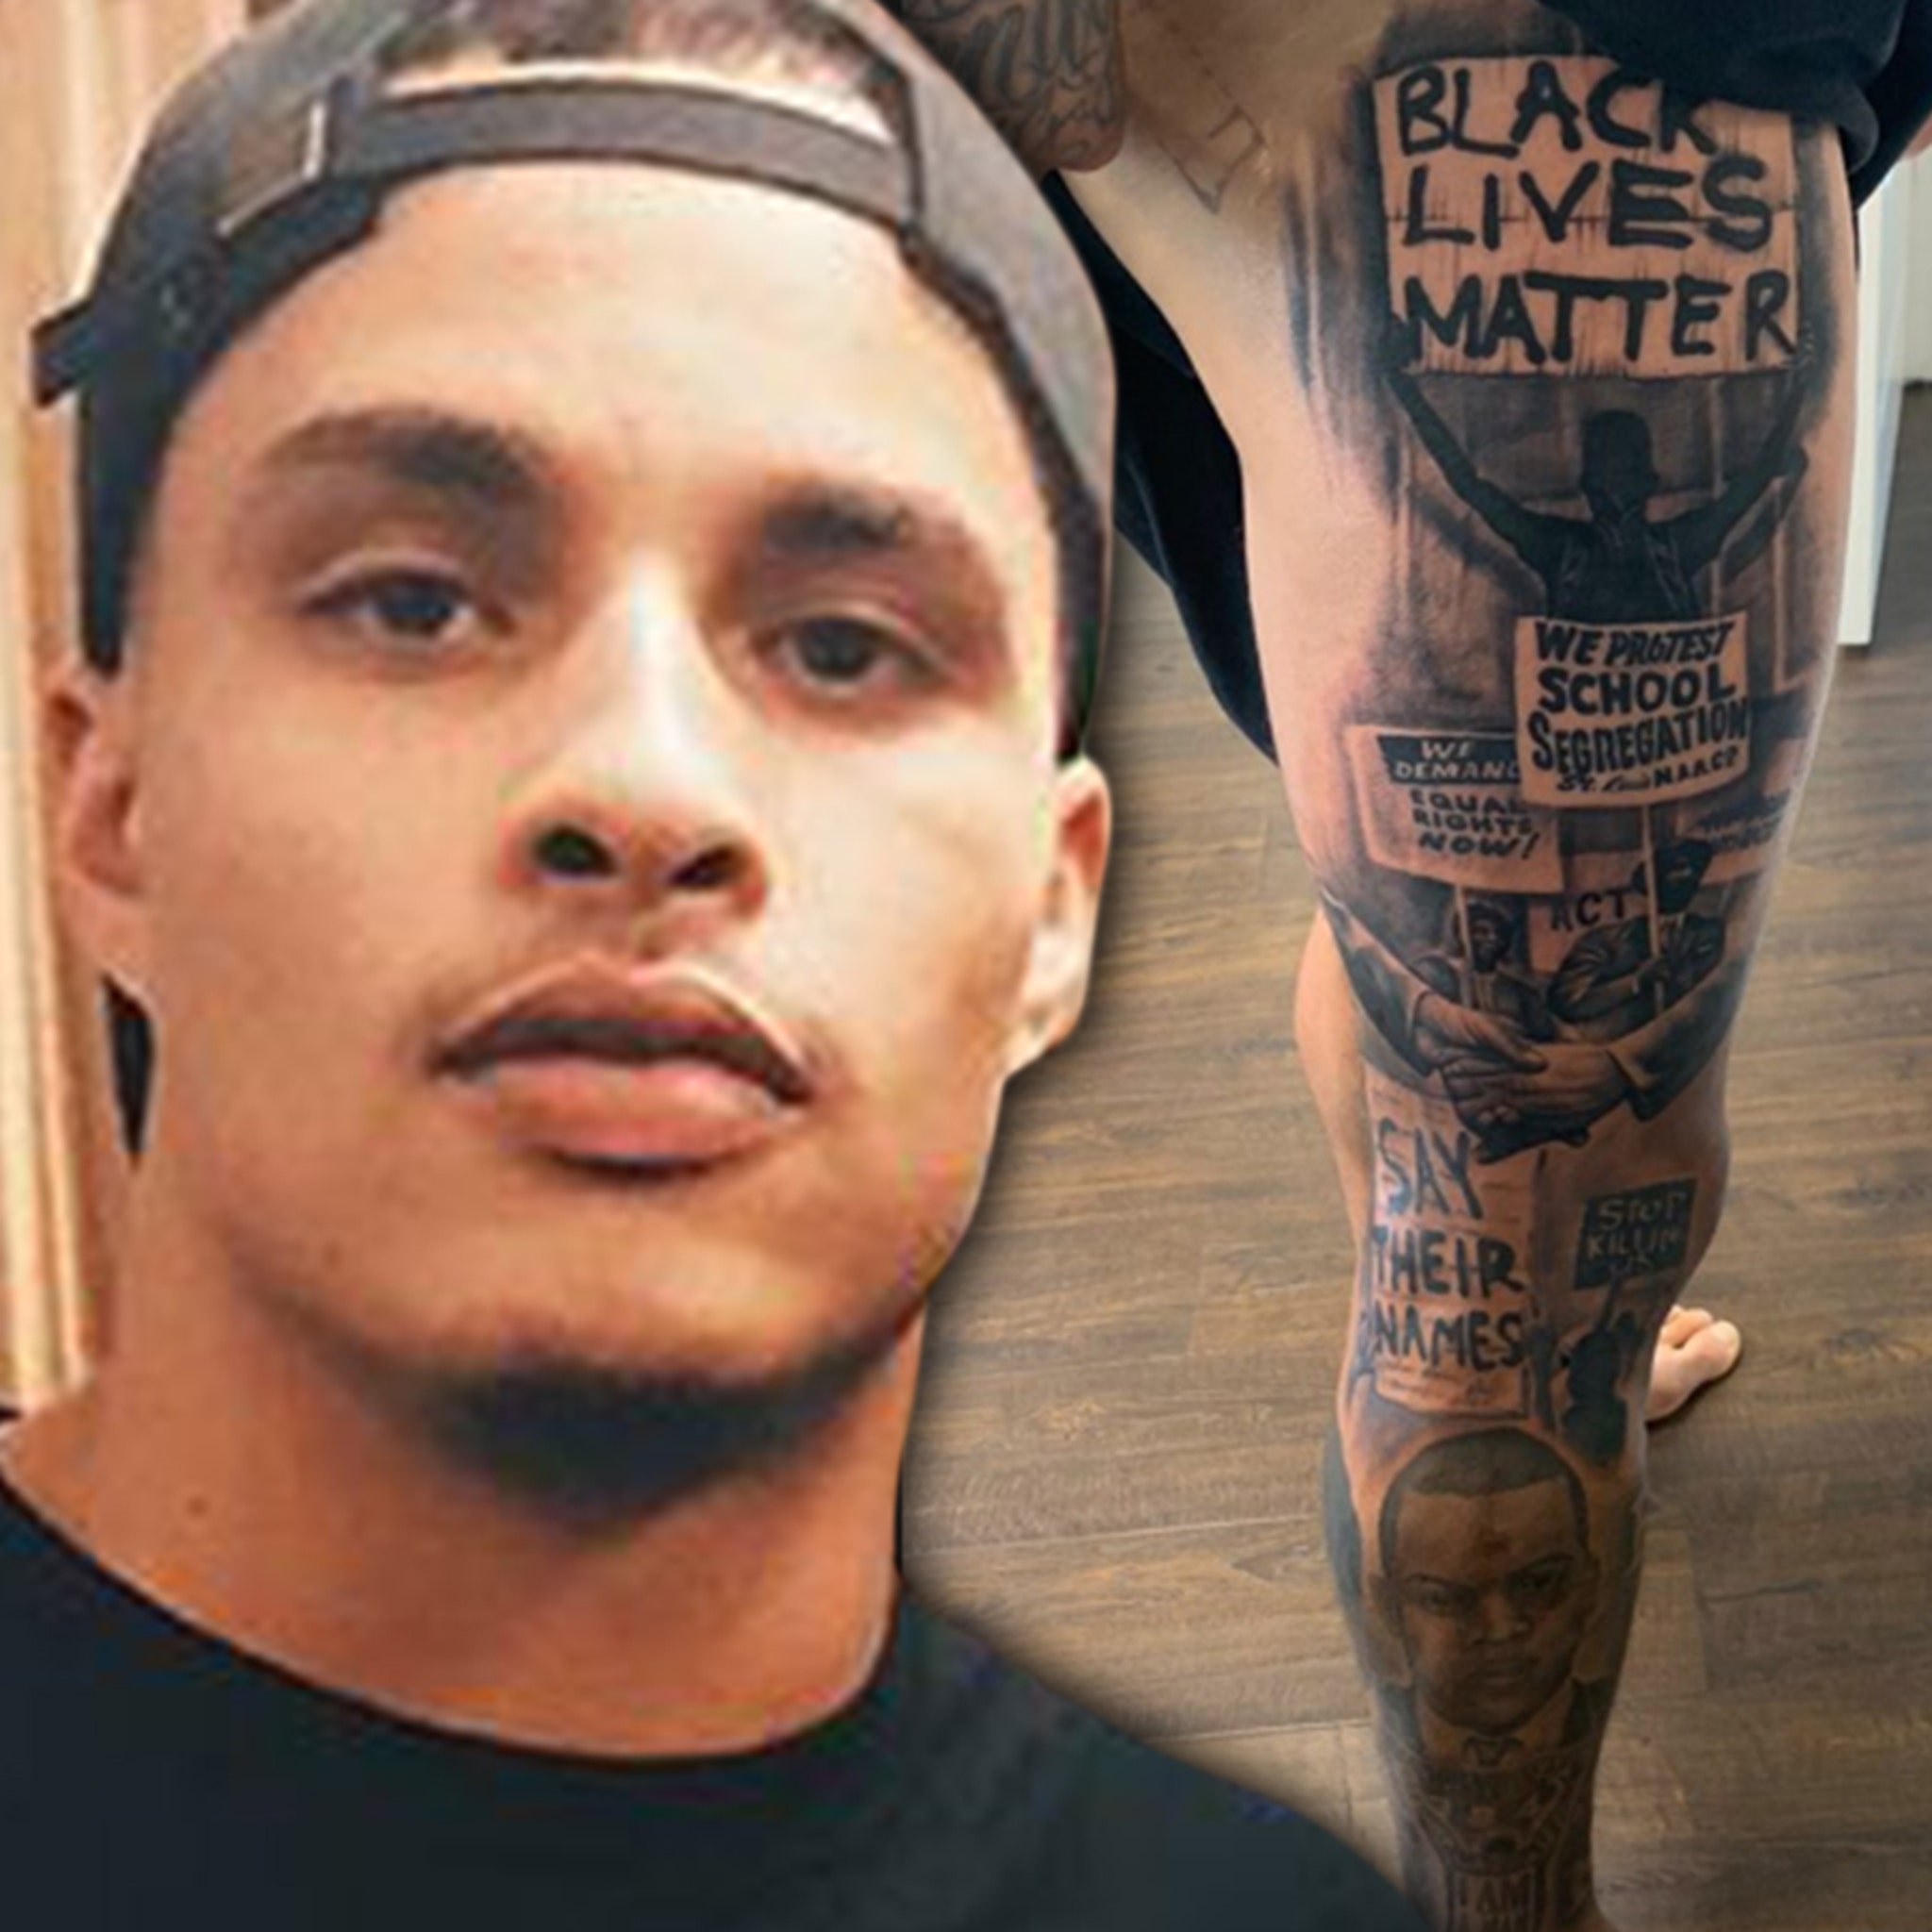 BLACK LIVES MATTER TATTOO  Against RACISM TATTOO  Useful Tattoo Ideas    YouTube